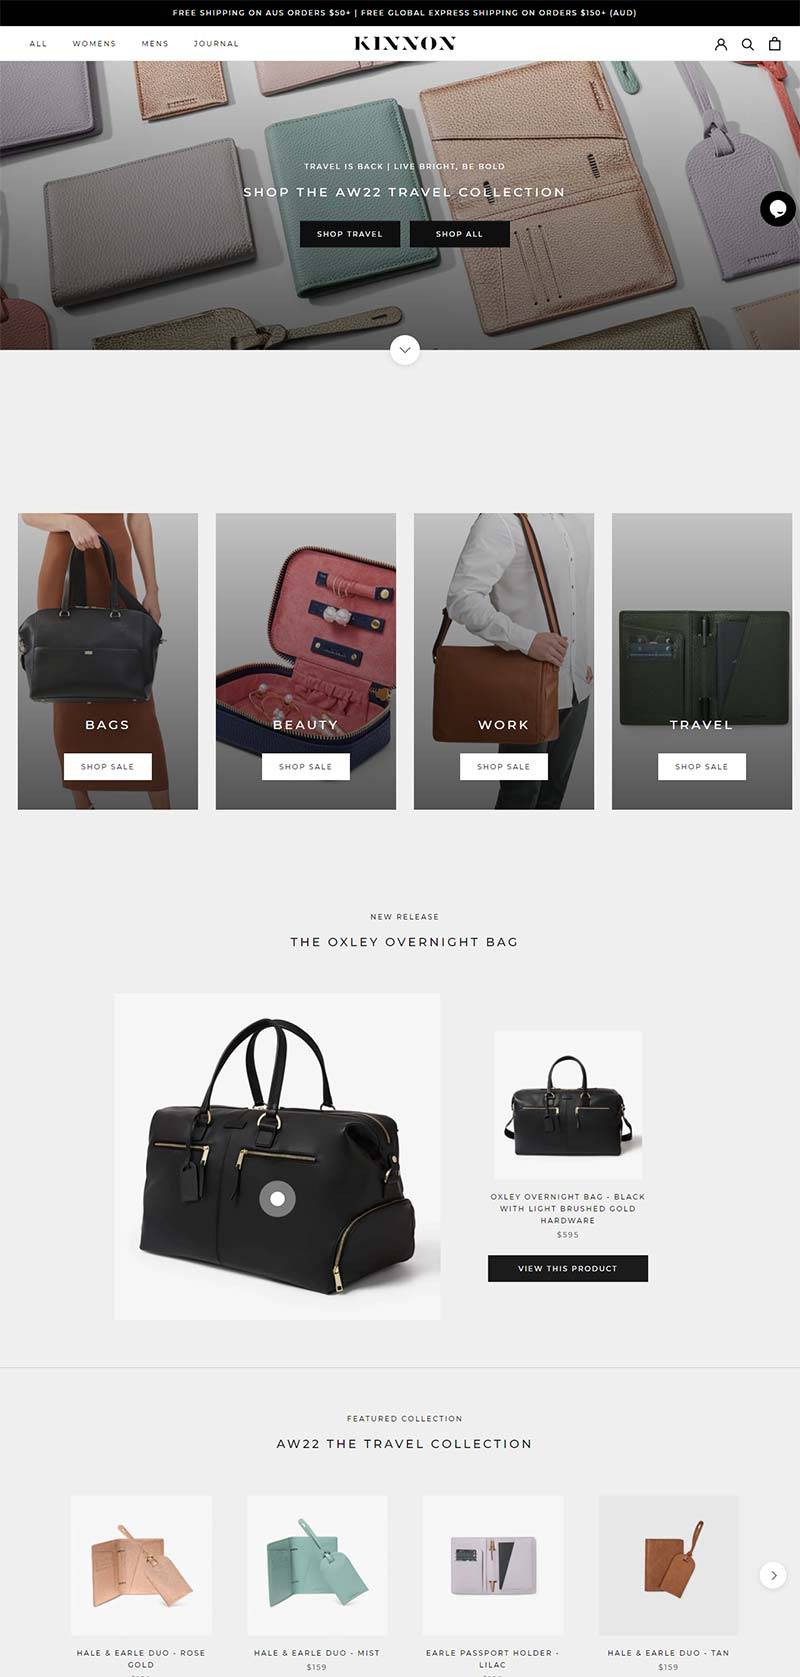 Kinnon 澳大利亚时尚包袋品牌购物网站